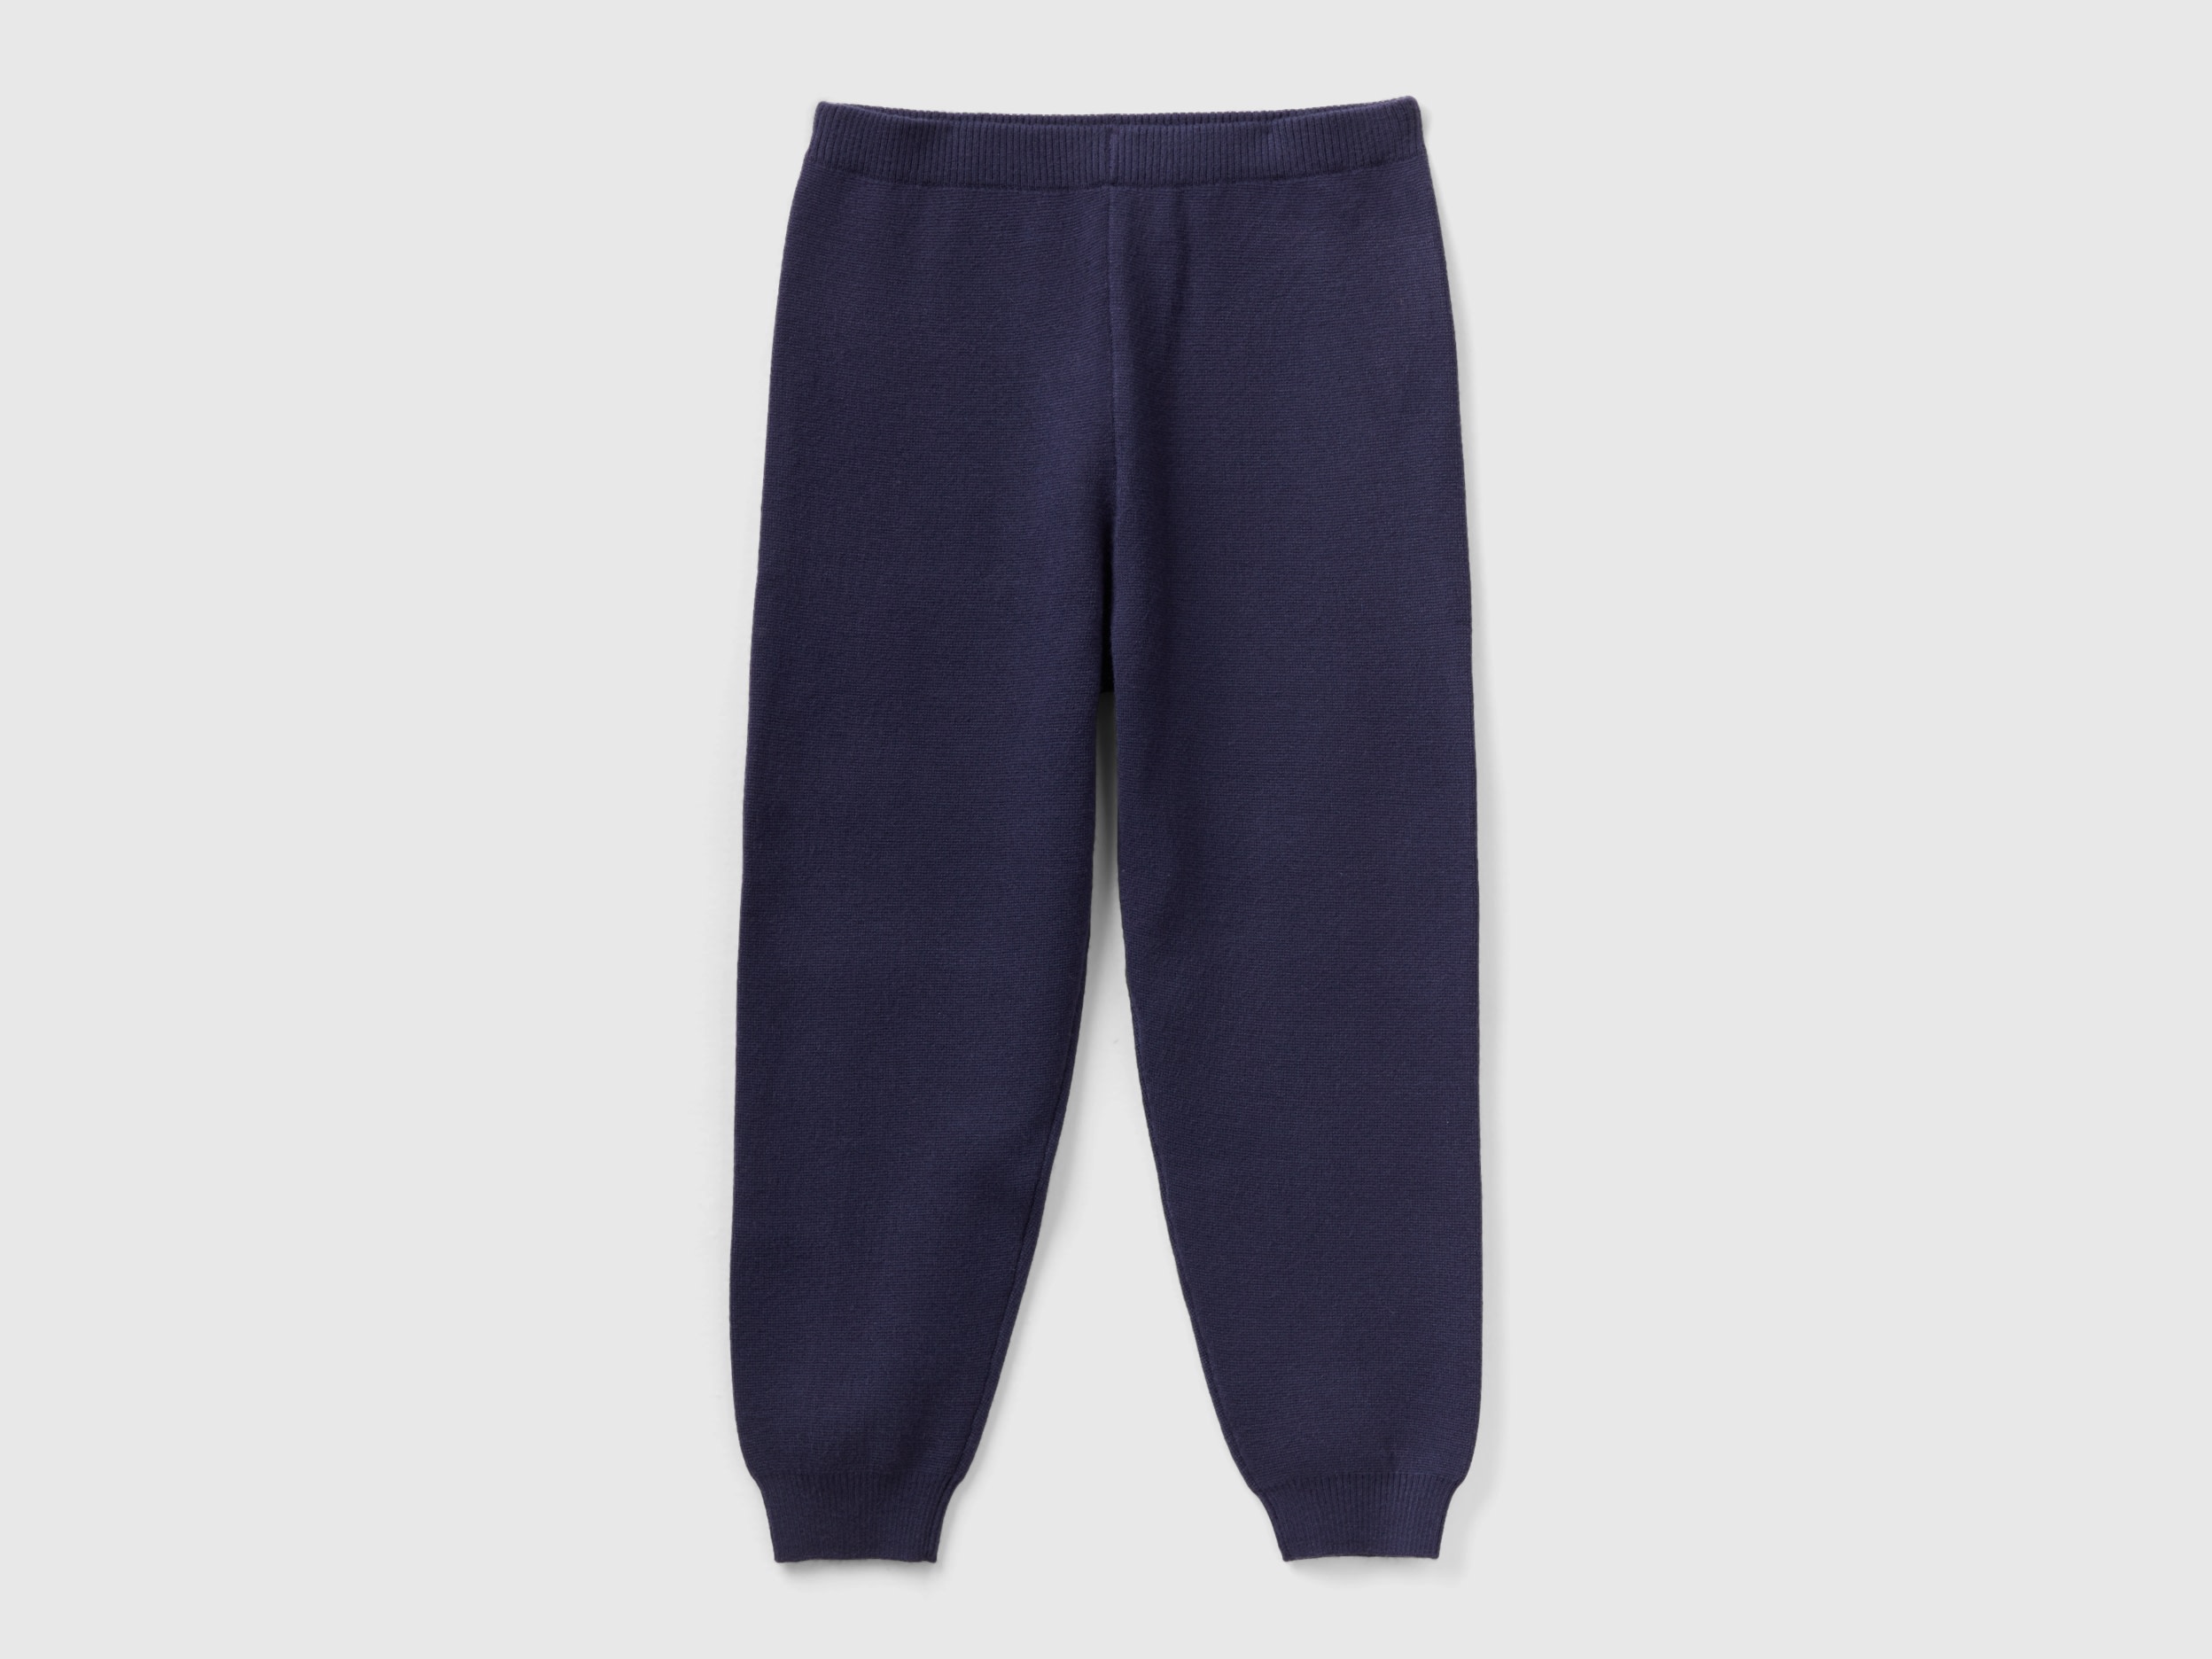 Benetton, Knit Trousers With Drawstring, size 3XL, Dark Blue, Kids